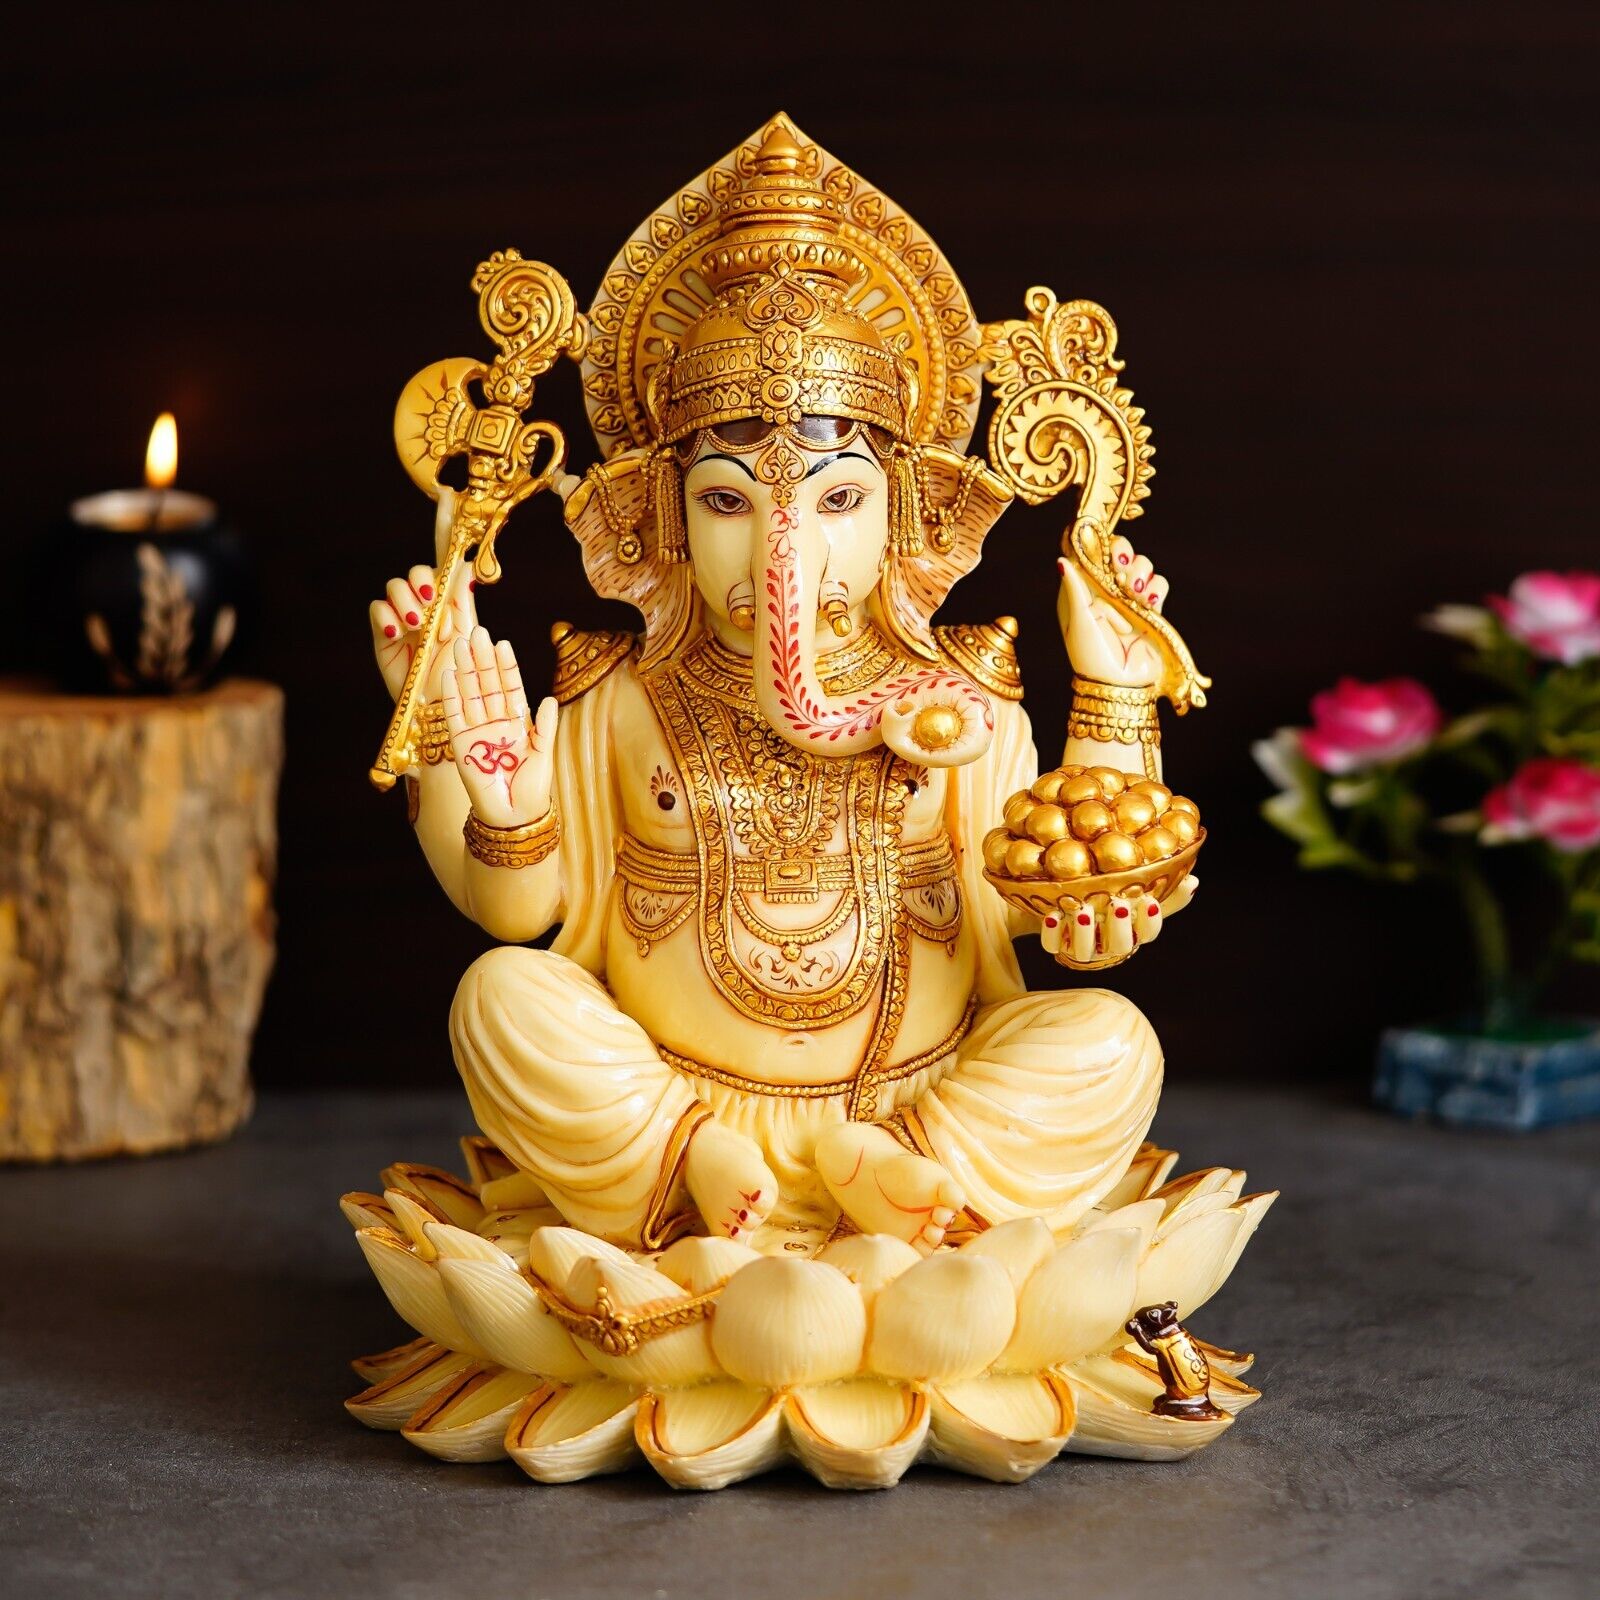 12 Inch Lord Ganesha Sculpture Ganpati Vinayank Sitting on Lotus Idol Figurine